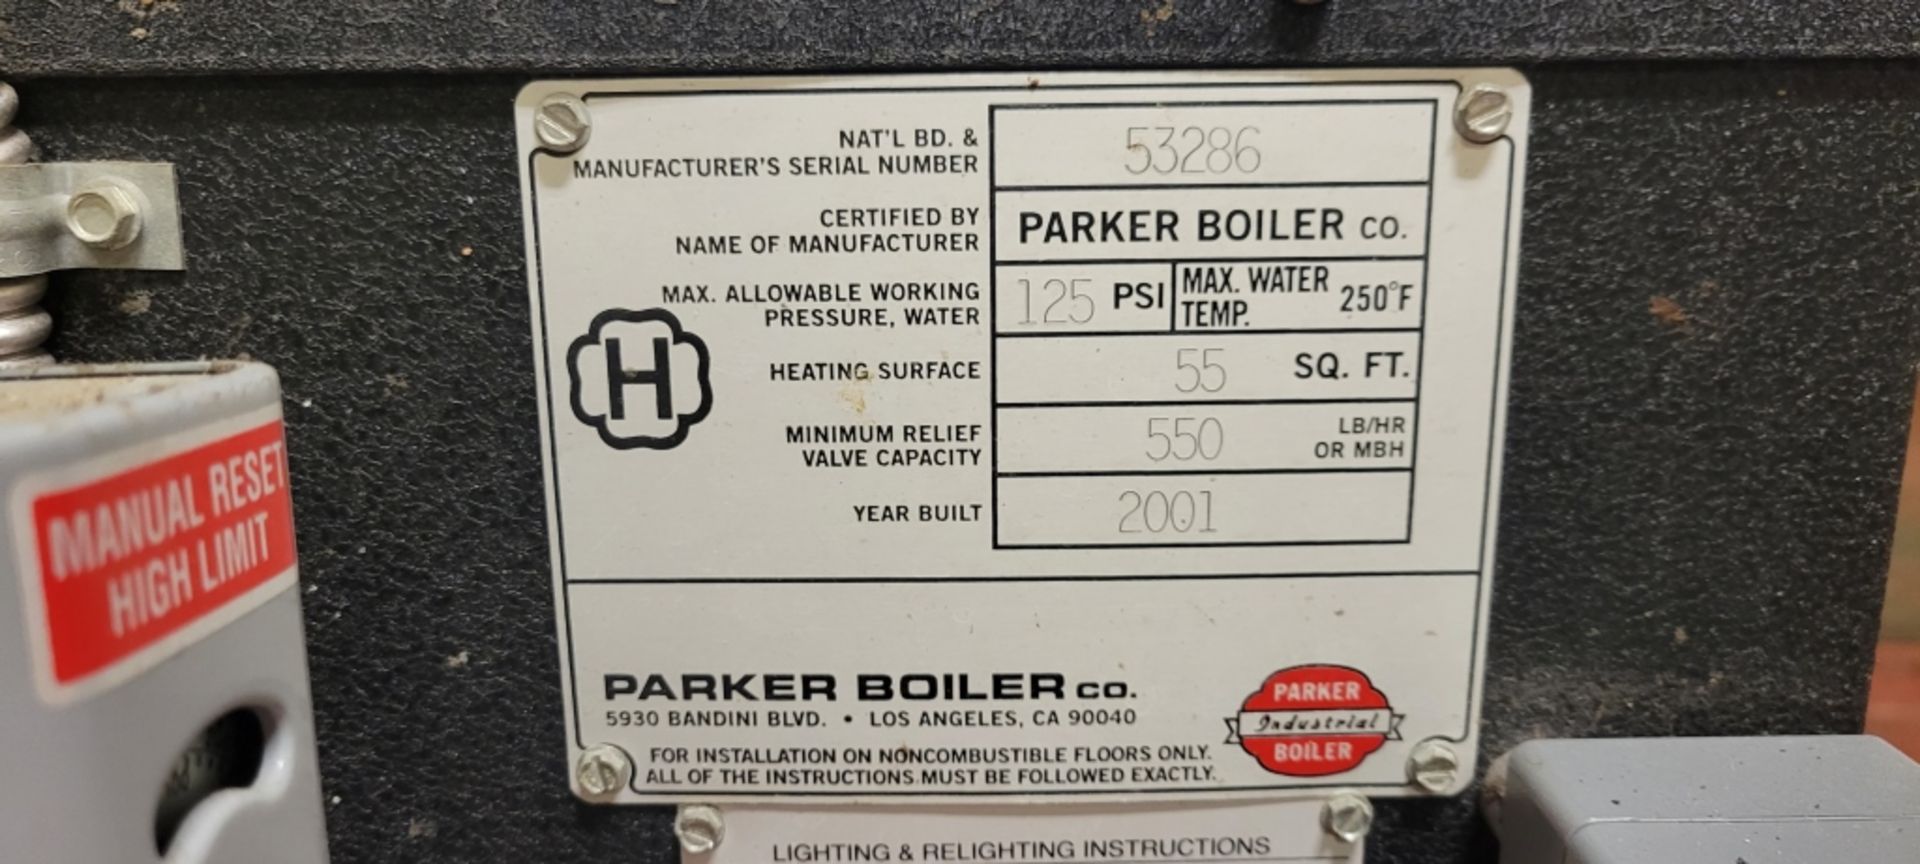 Parker Industrial Boiler Water Heater - Image 3 of 4